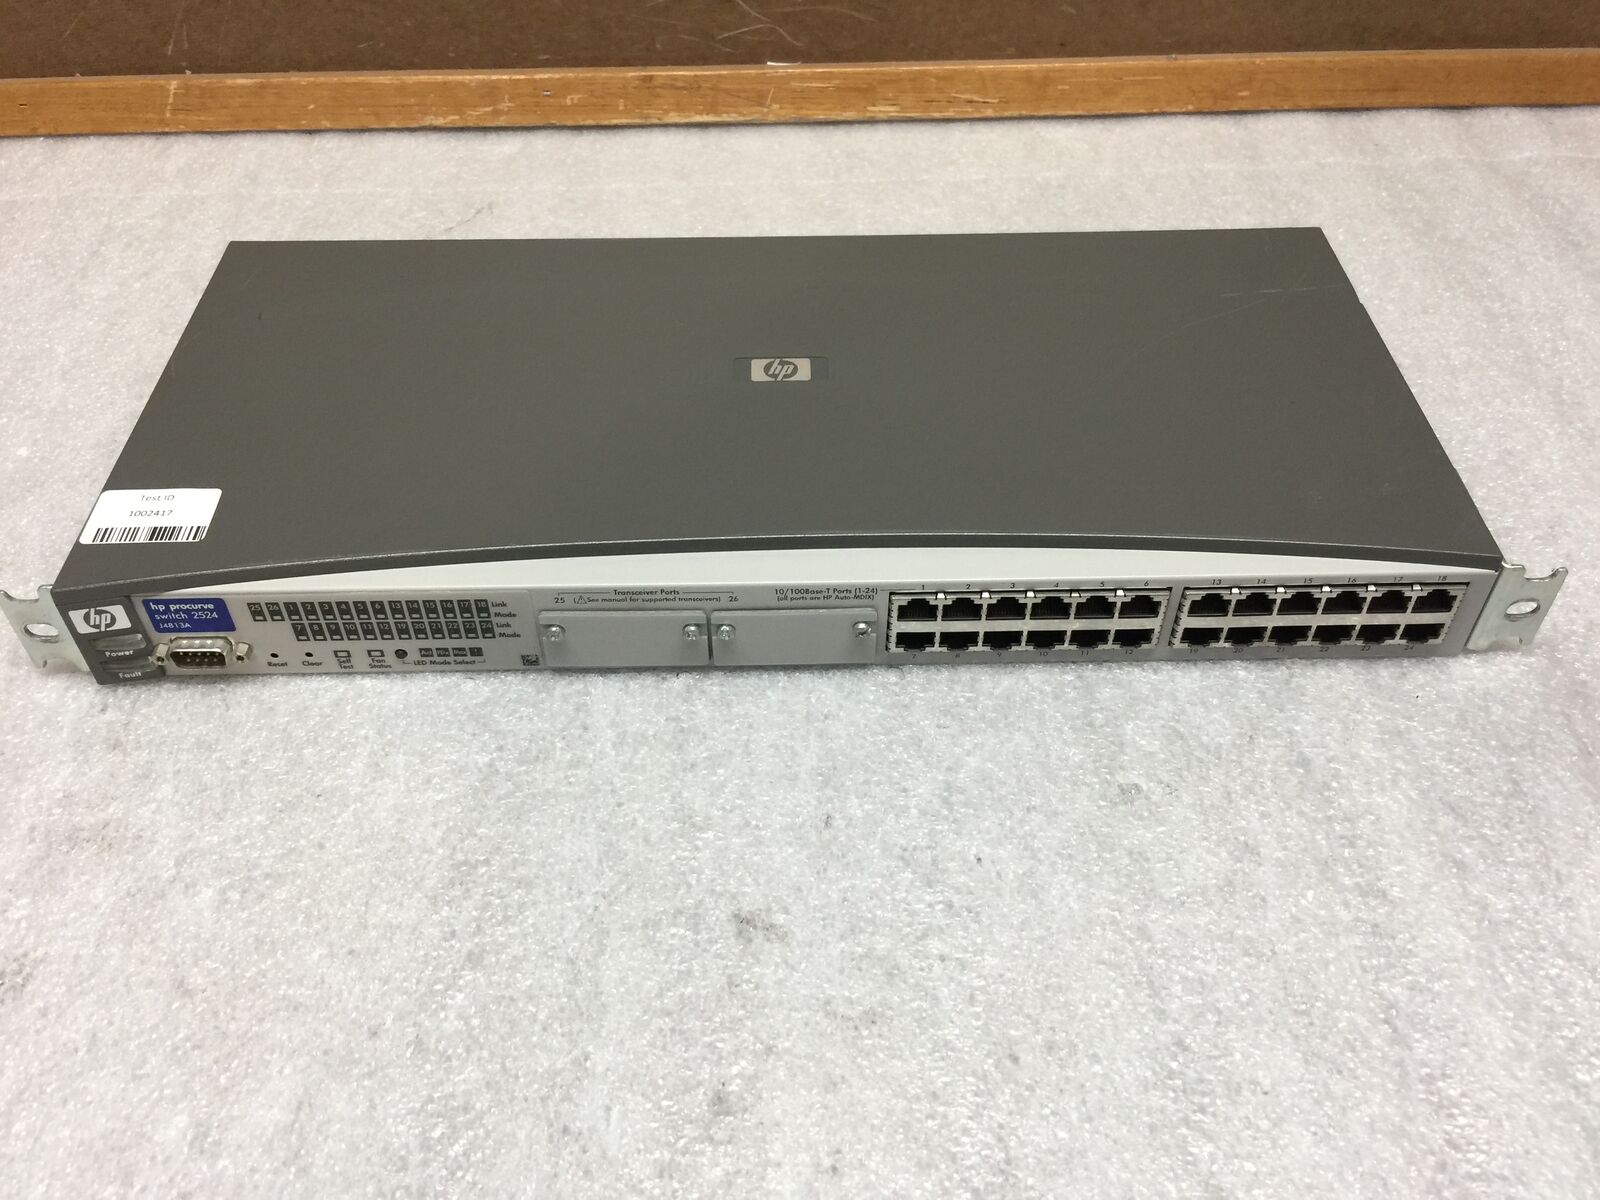 HP ProCurve Switch 2524 J4813A, 24-Port 10/100Mb Ethernet Switch, Tested